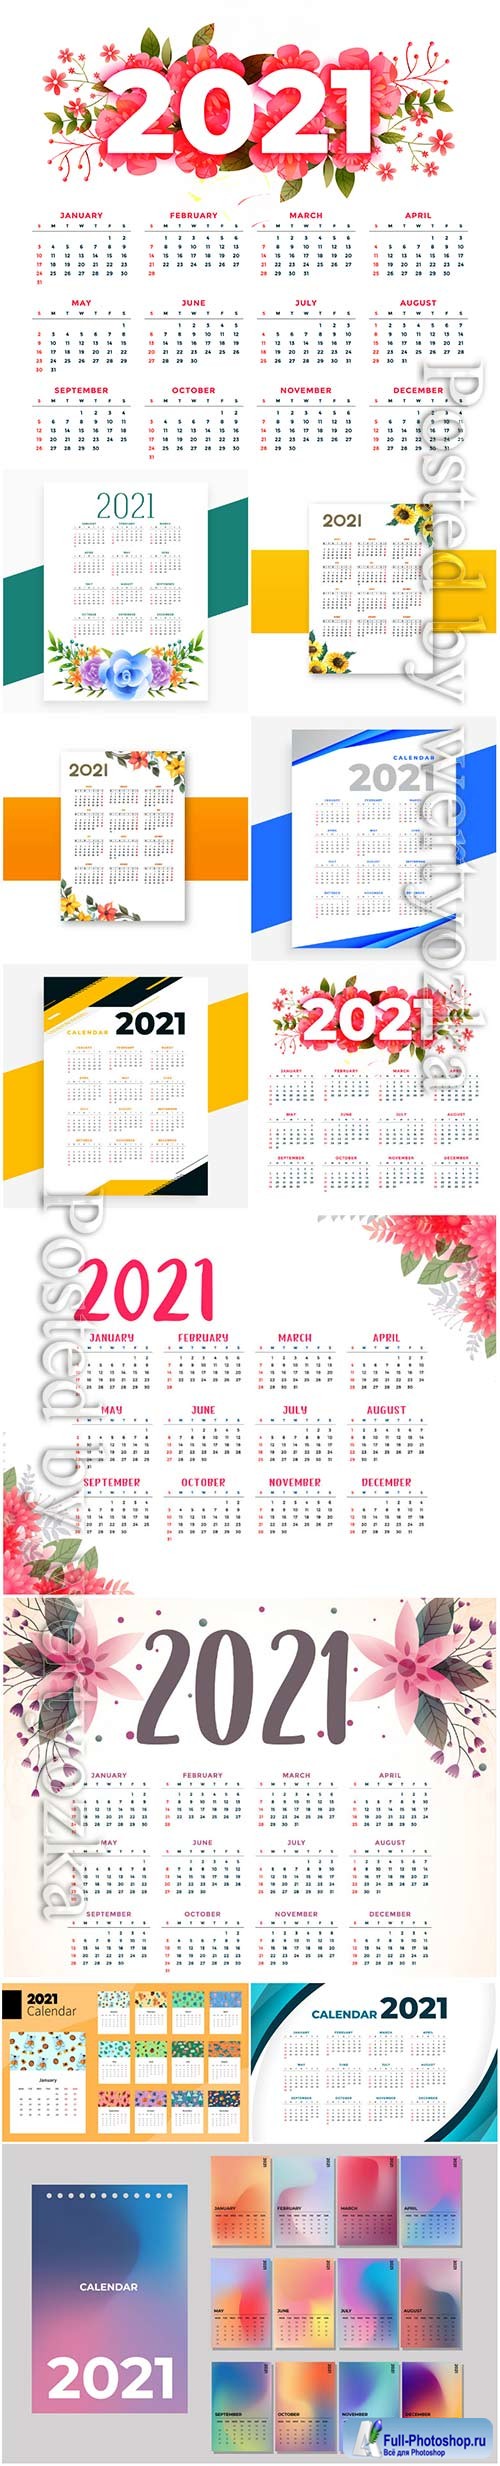 Flower style 2021 beautiful calendar template